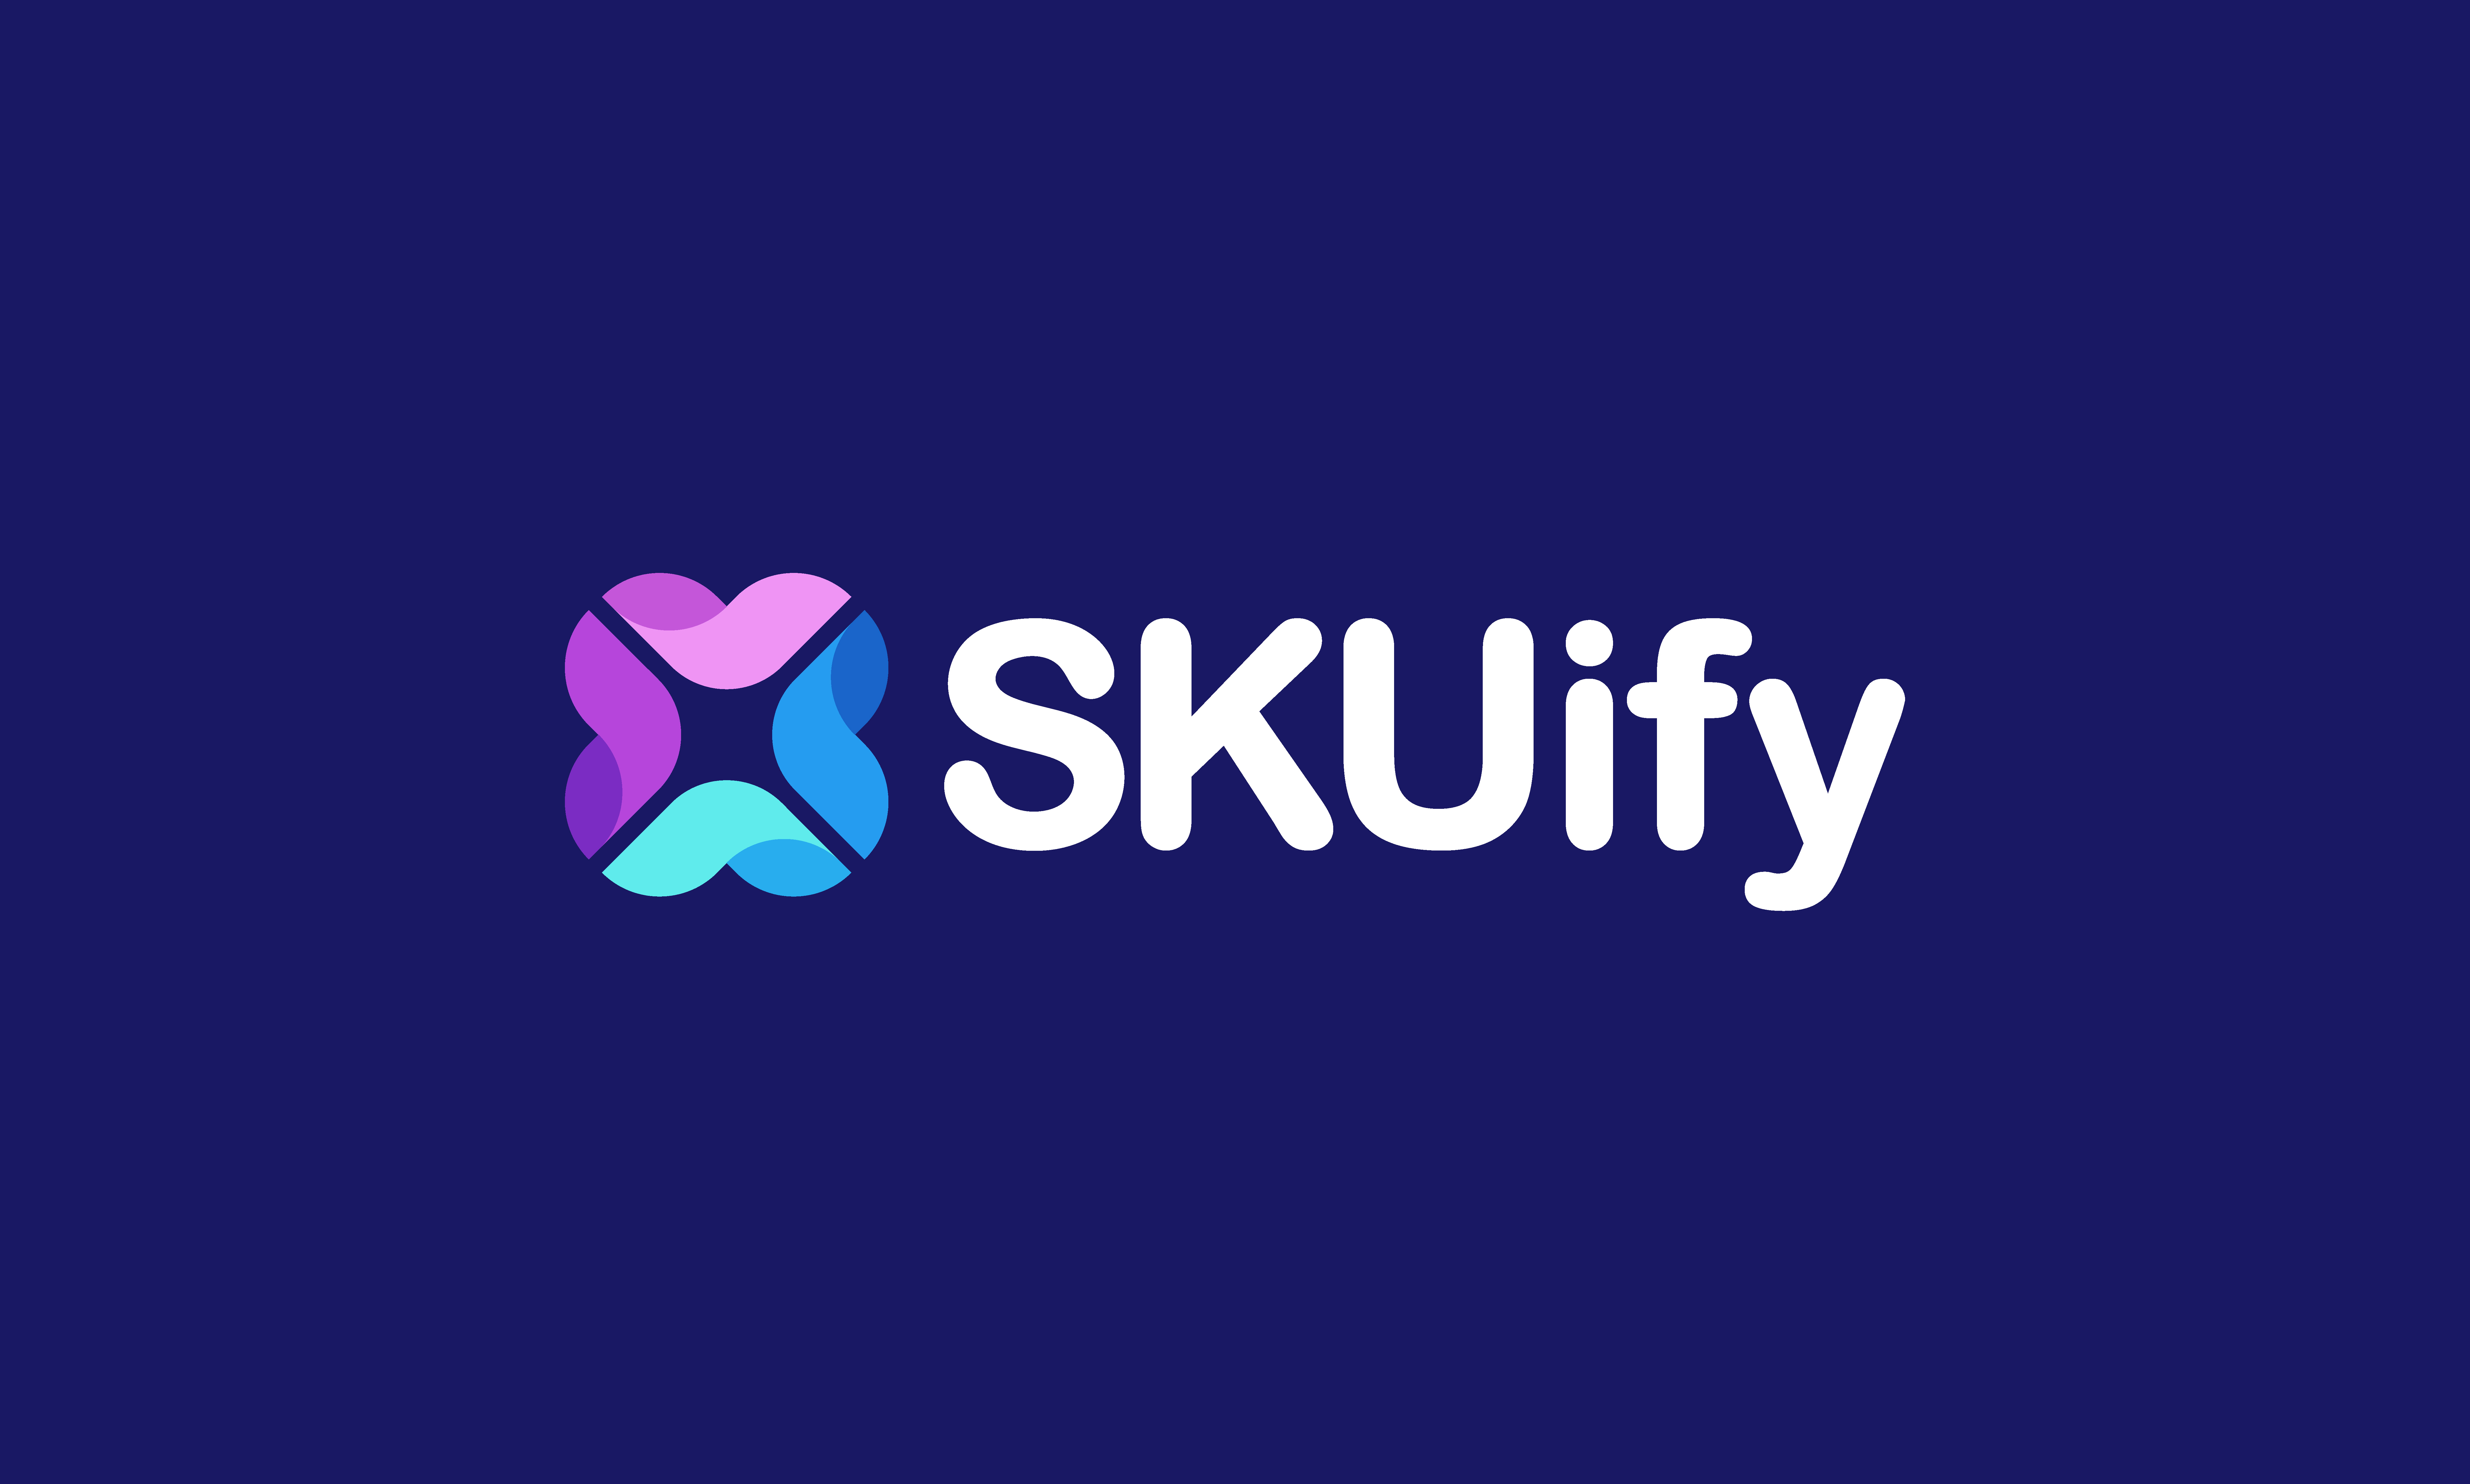 SKUify logo